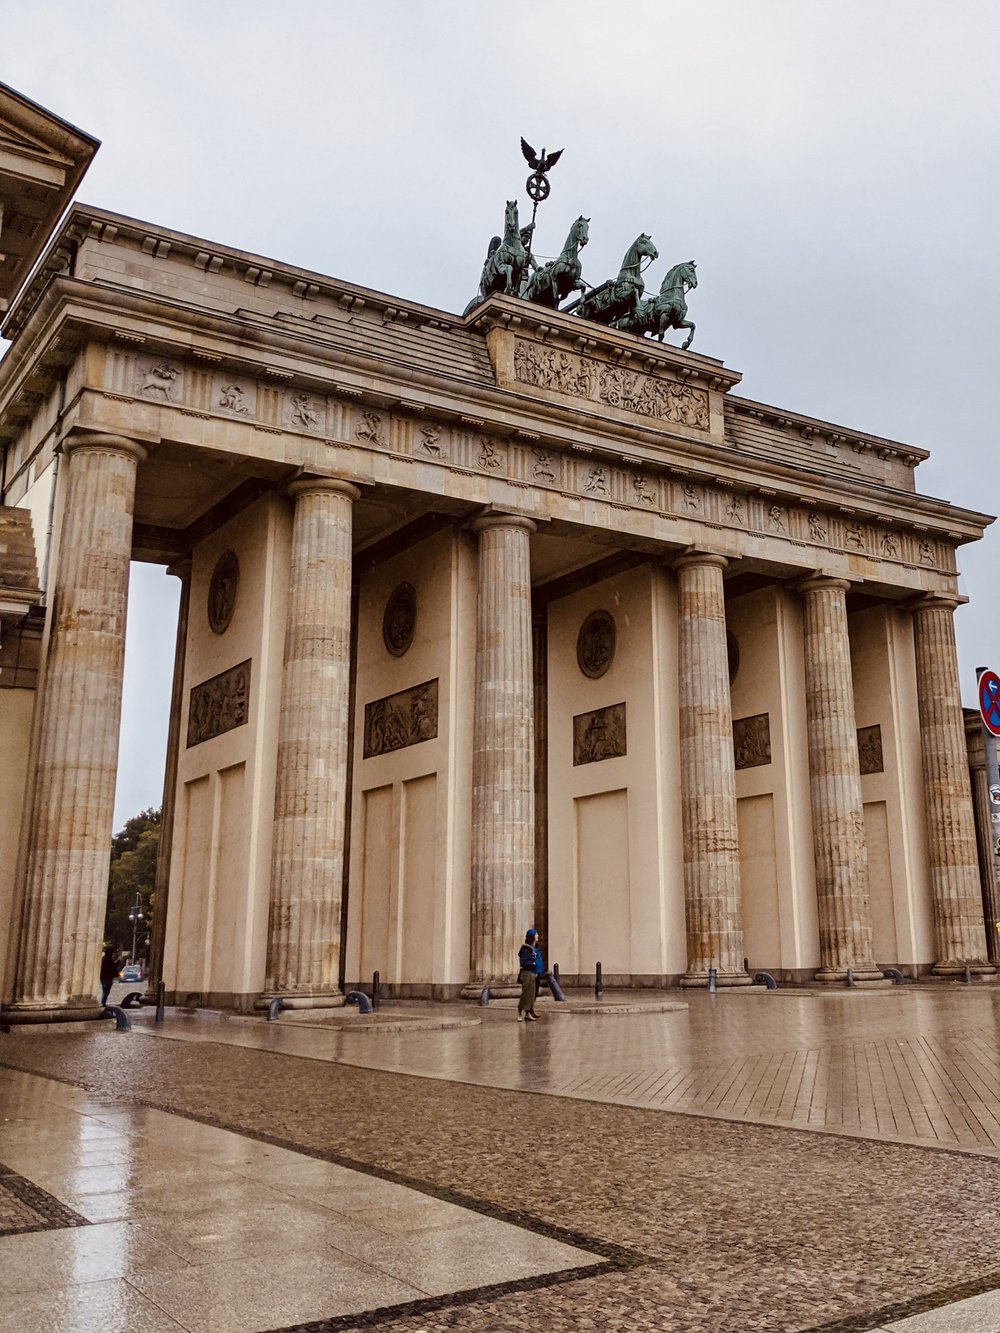 Visit the Brandenburg Gate before continuing your stroll in Tiergarten.